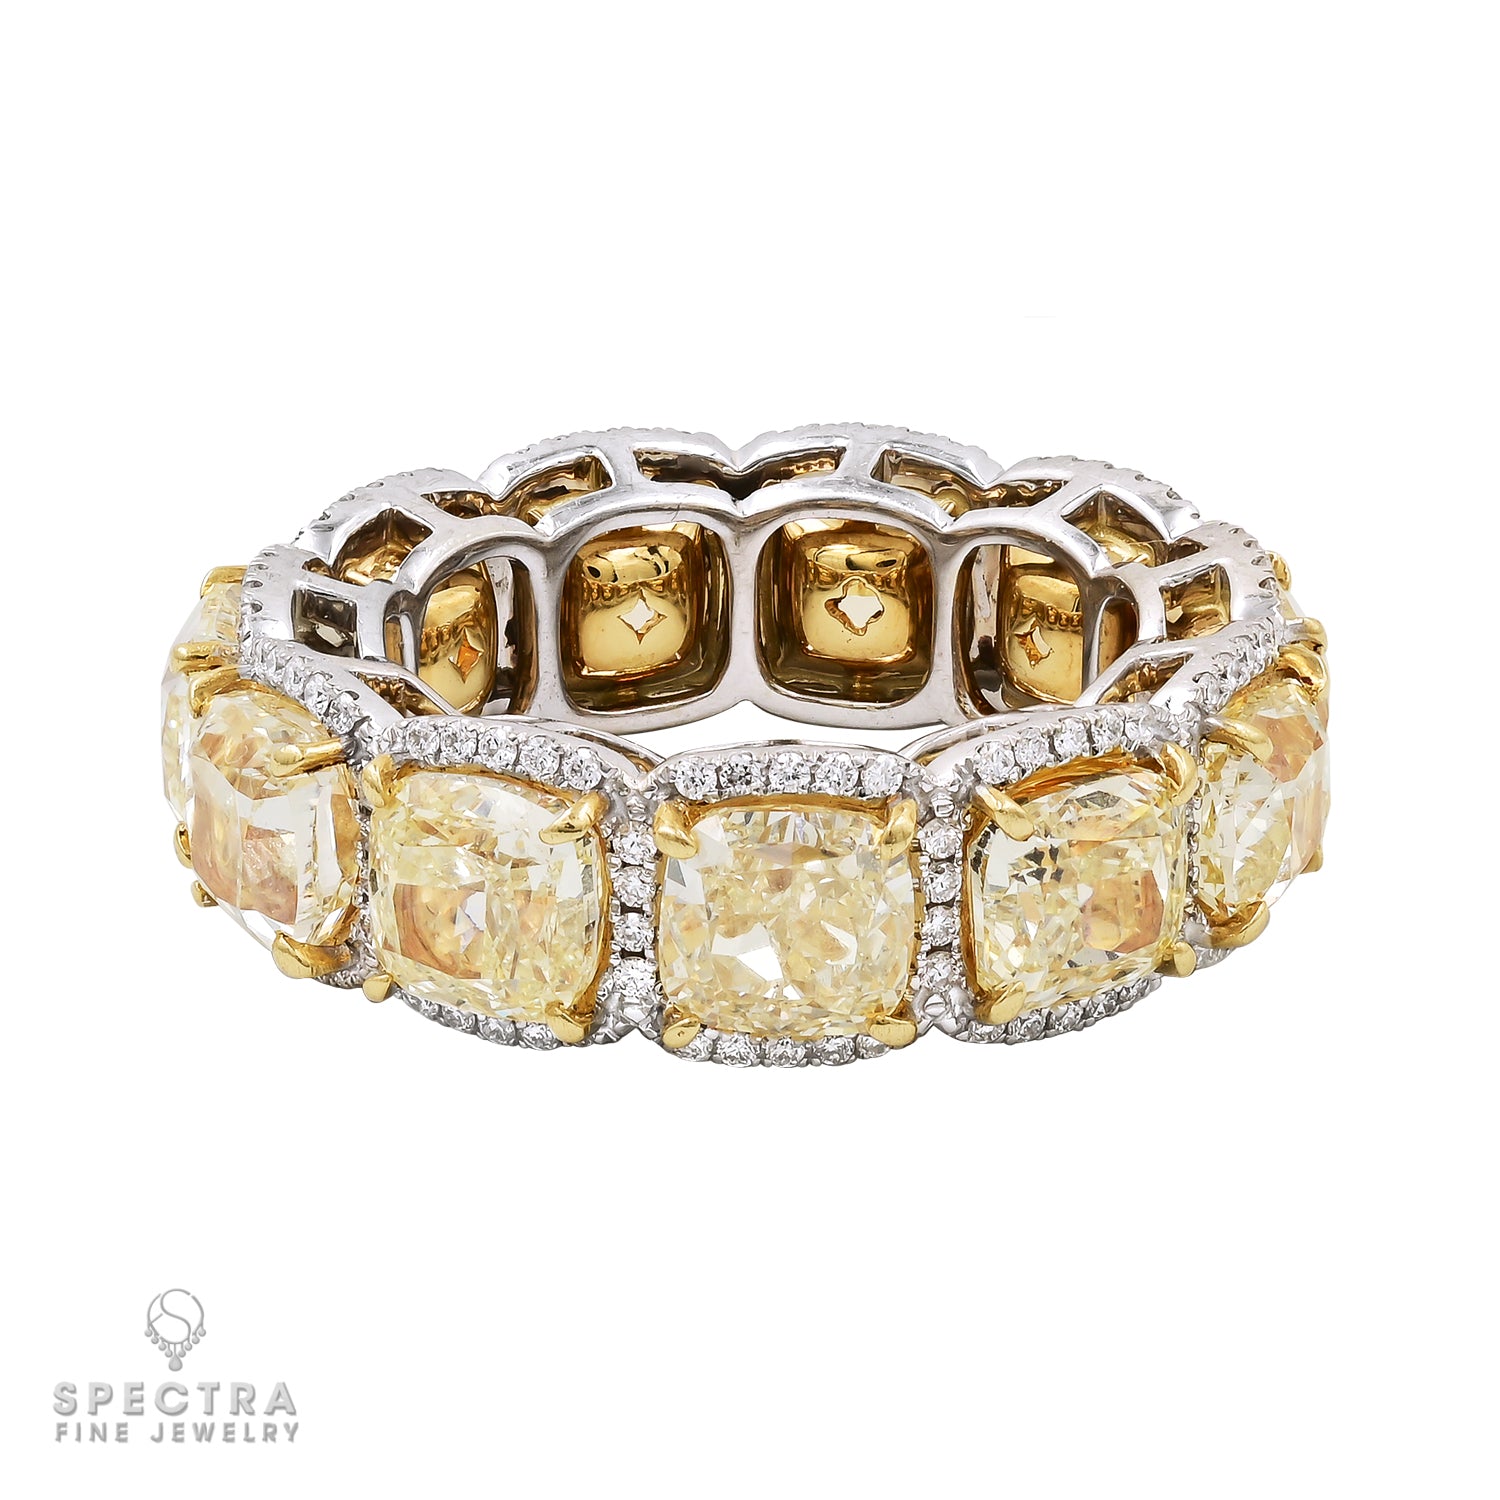 Spectra Fine Jewelry 12.04cts Cushion Fancy Yellow Diamond Eternity Band Ring